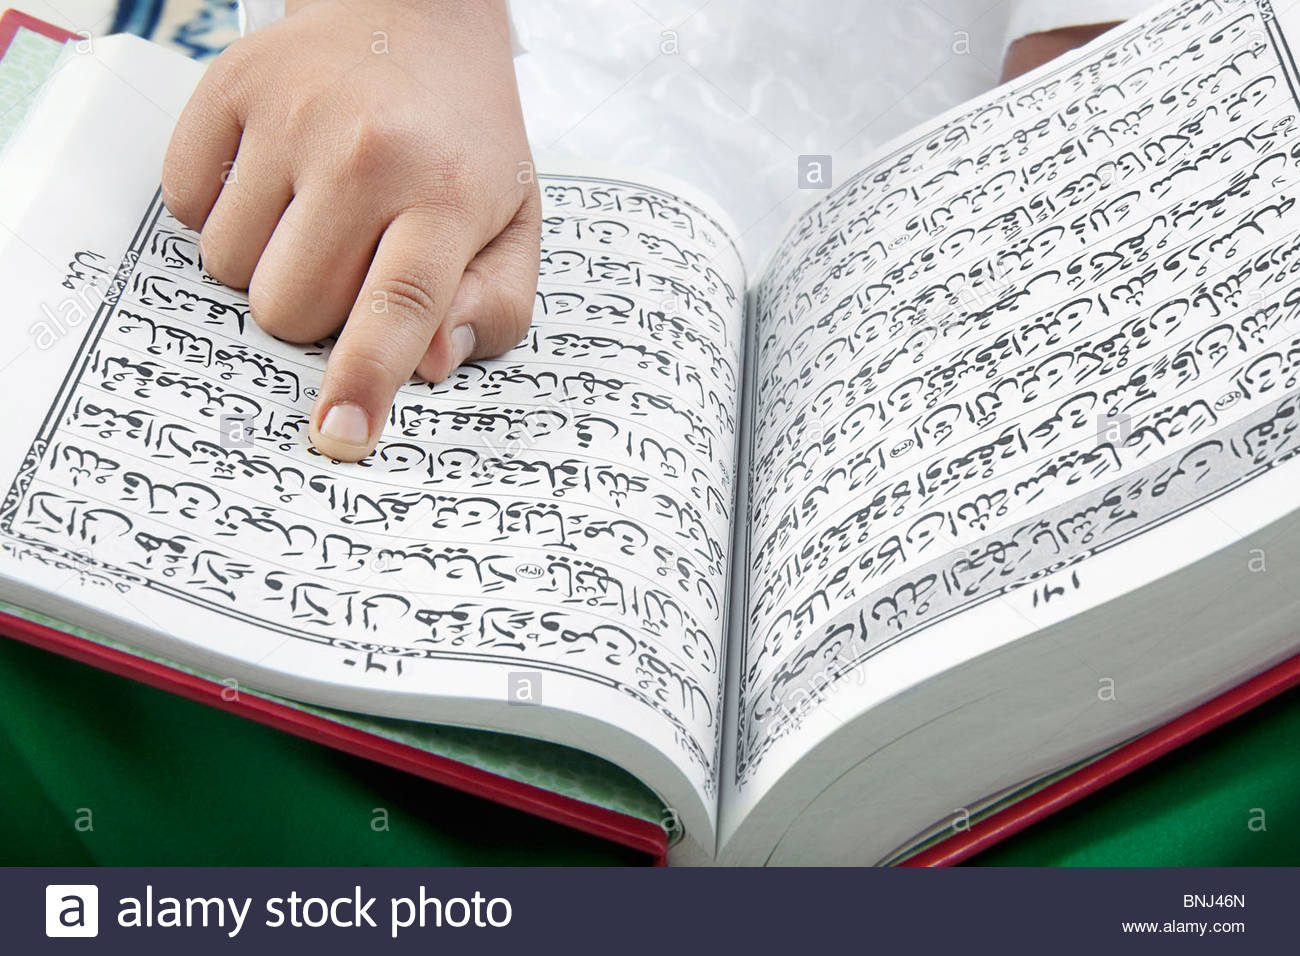 muslim-boy-reading-the-quran-BNJ46N.jpg